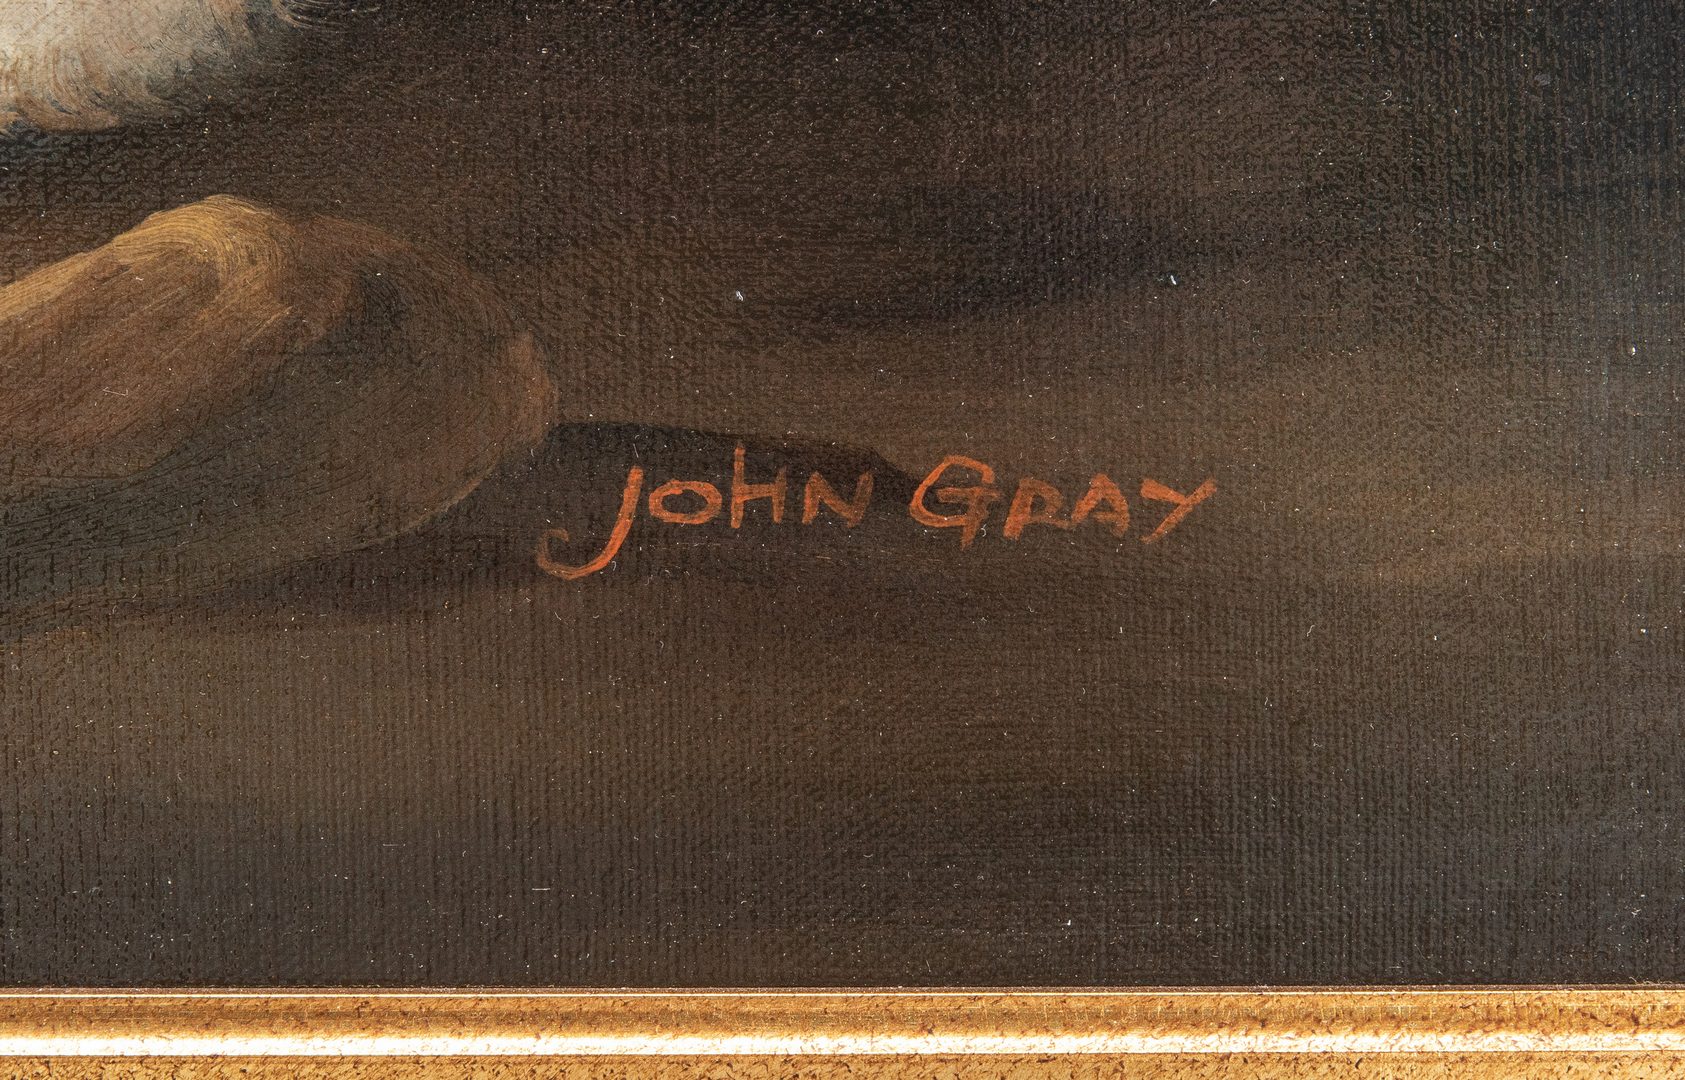 Lot 733: John Gray O/C, Portrait of a Spaniel